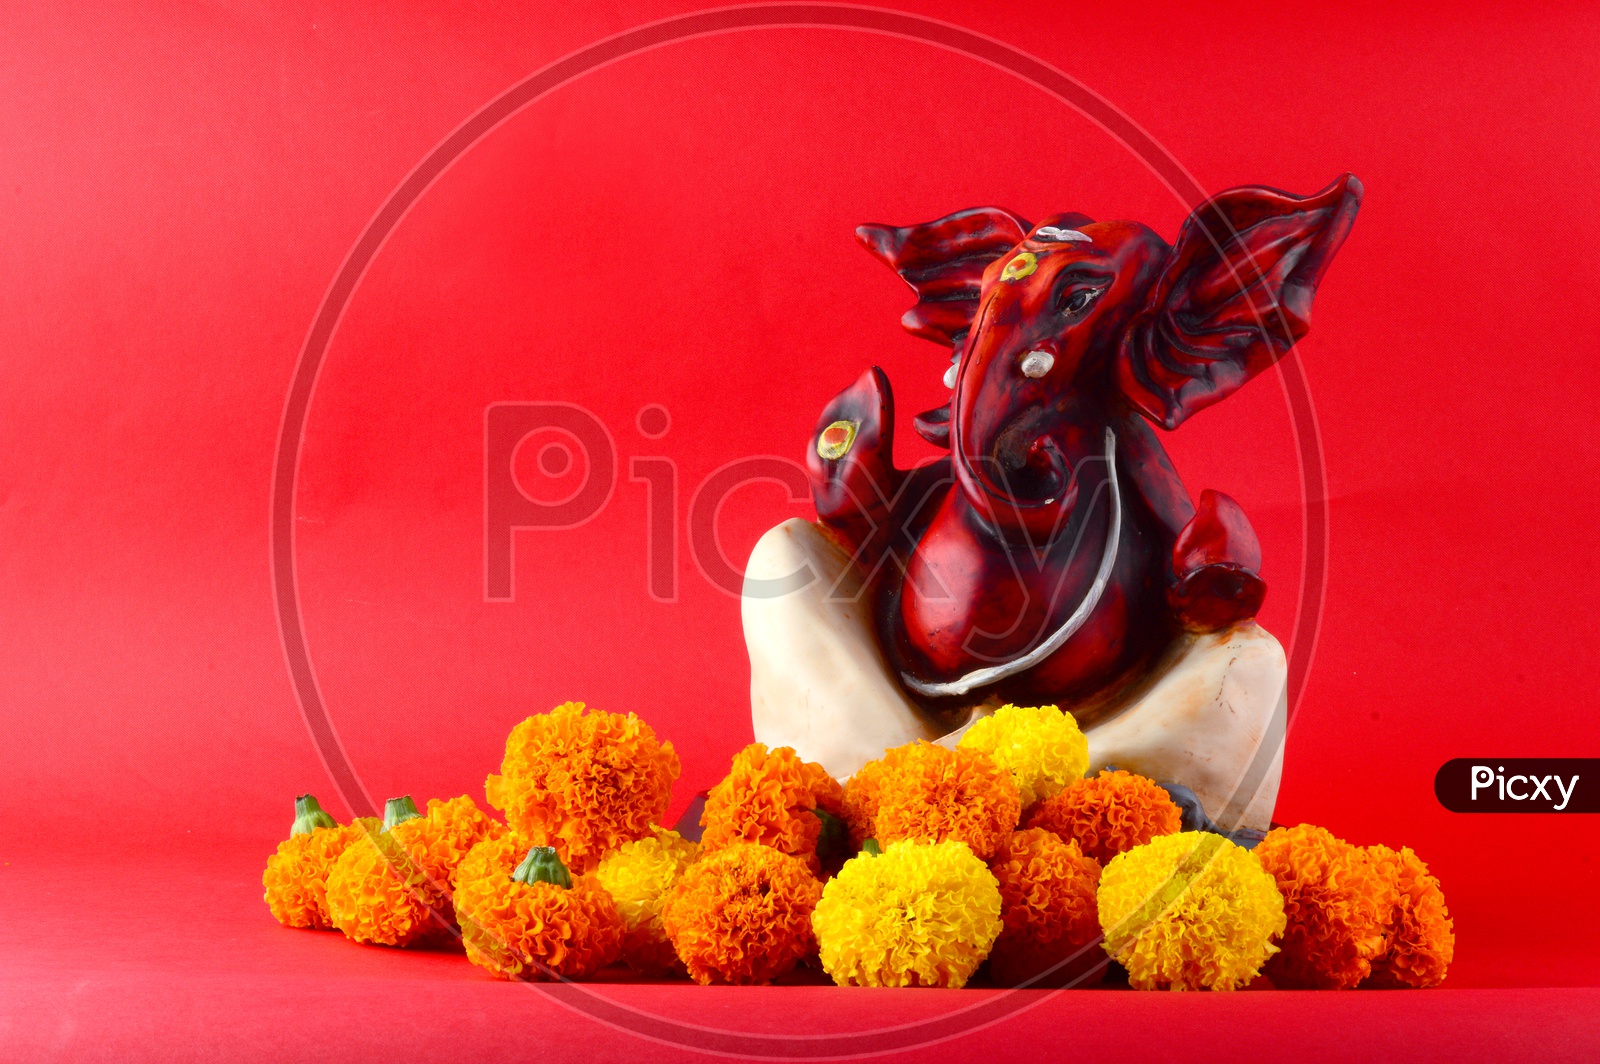 Hindu God Ganesha or Ganapathi. Lord Ganesha Idol on Red Background